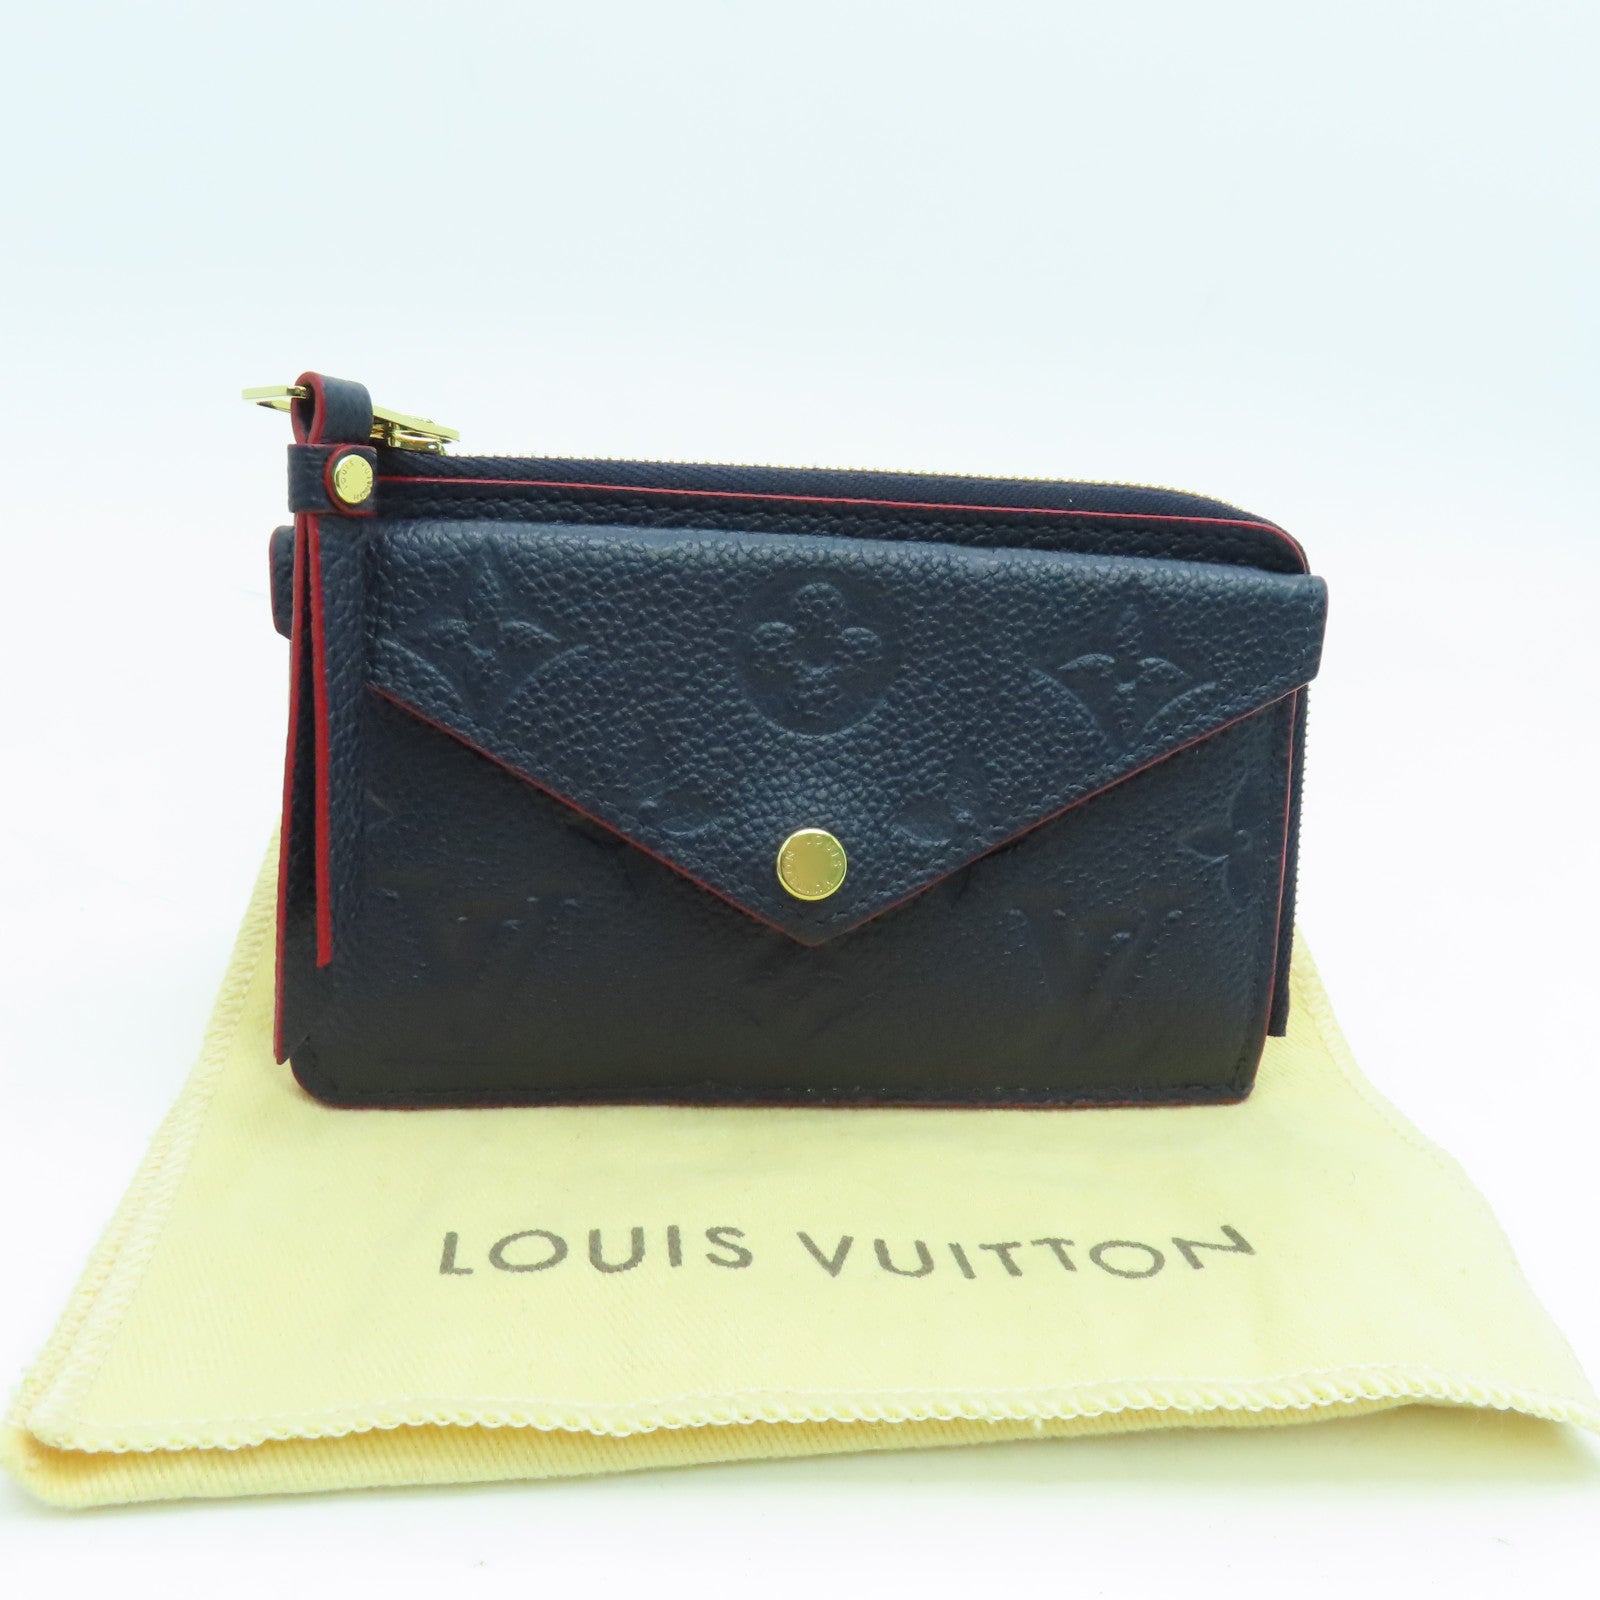 INTRODUCING Louis Vuitton Card Holder Recto Verso in